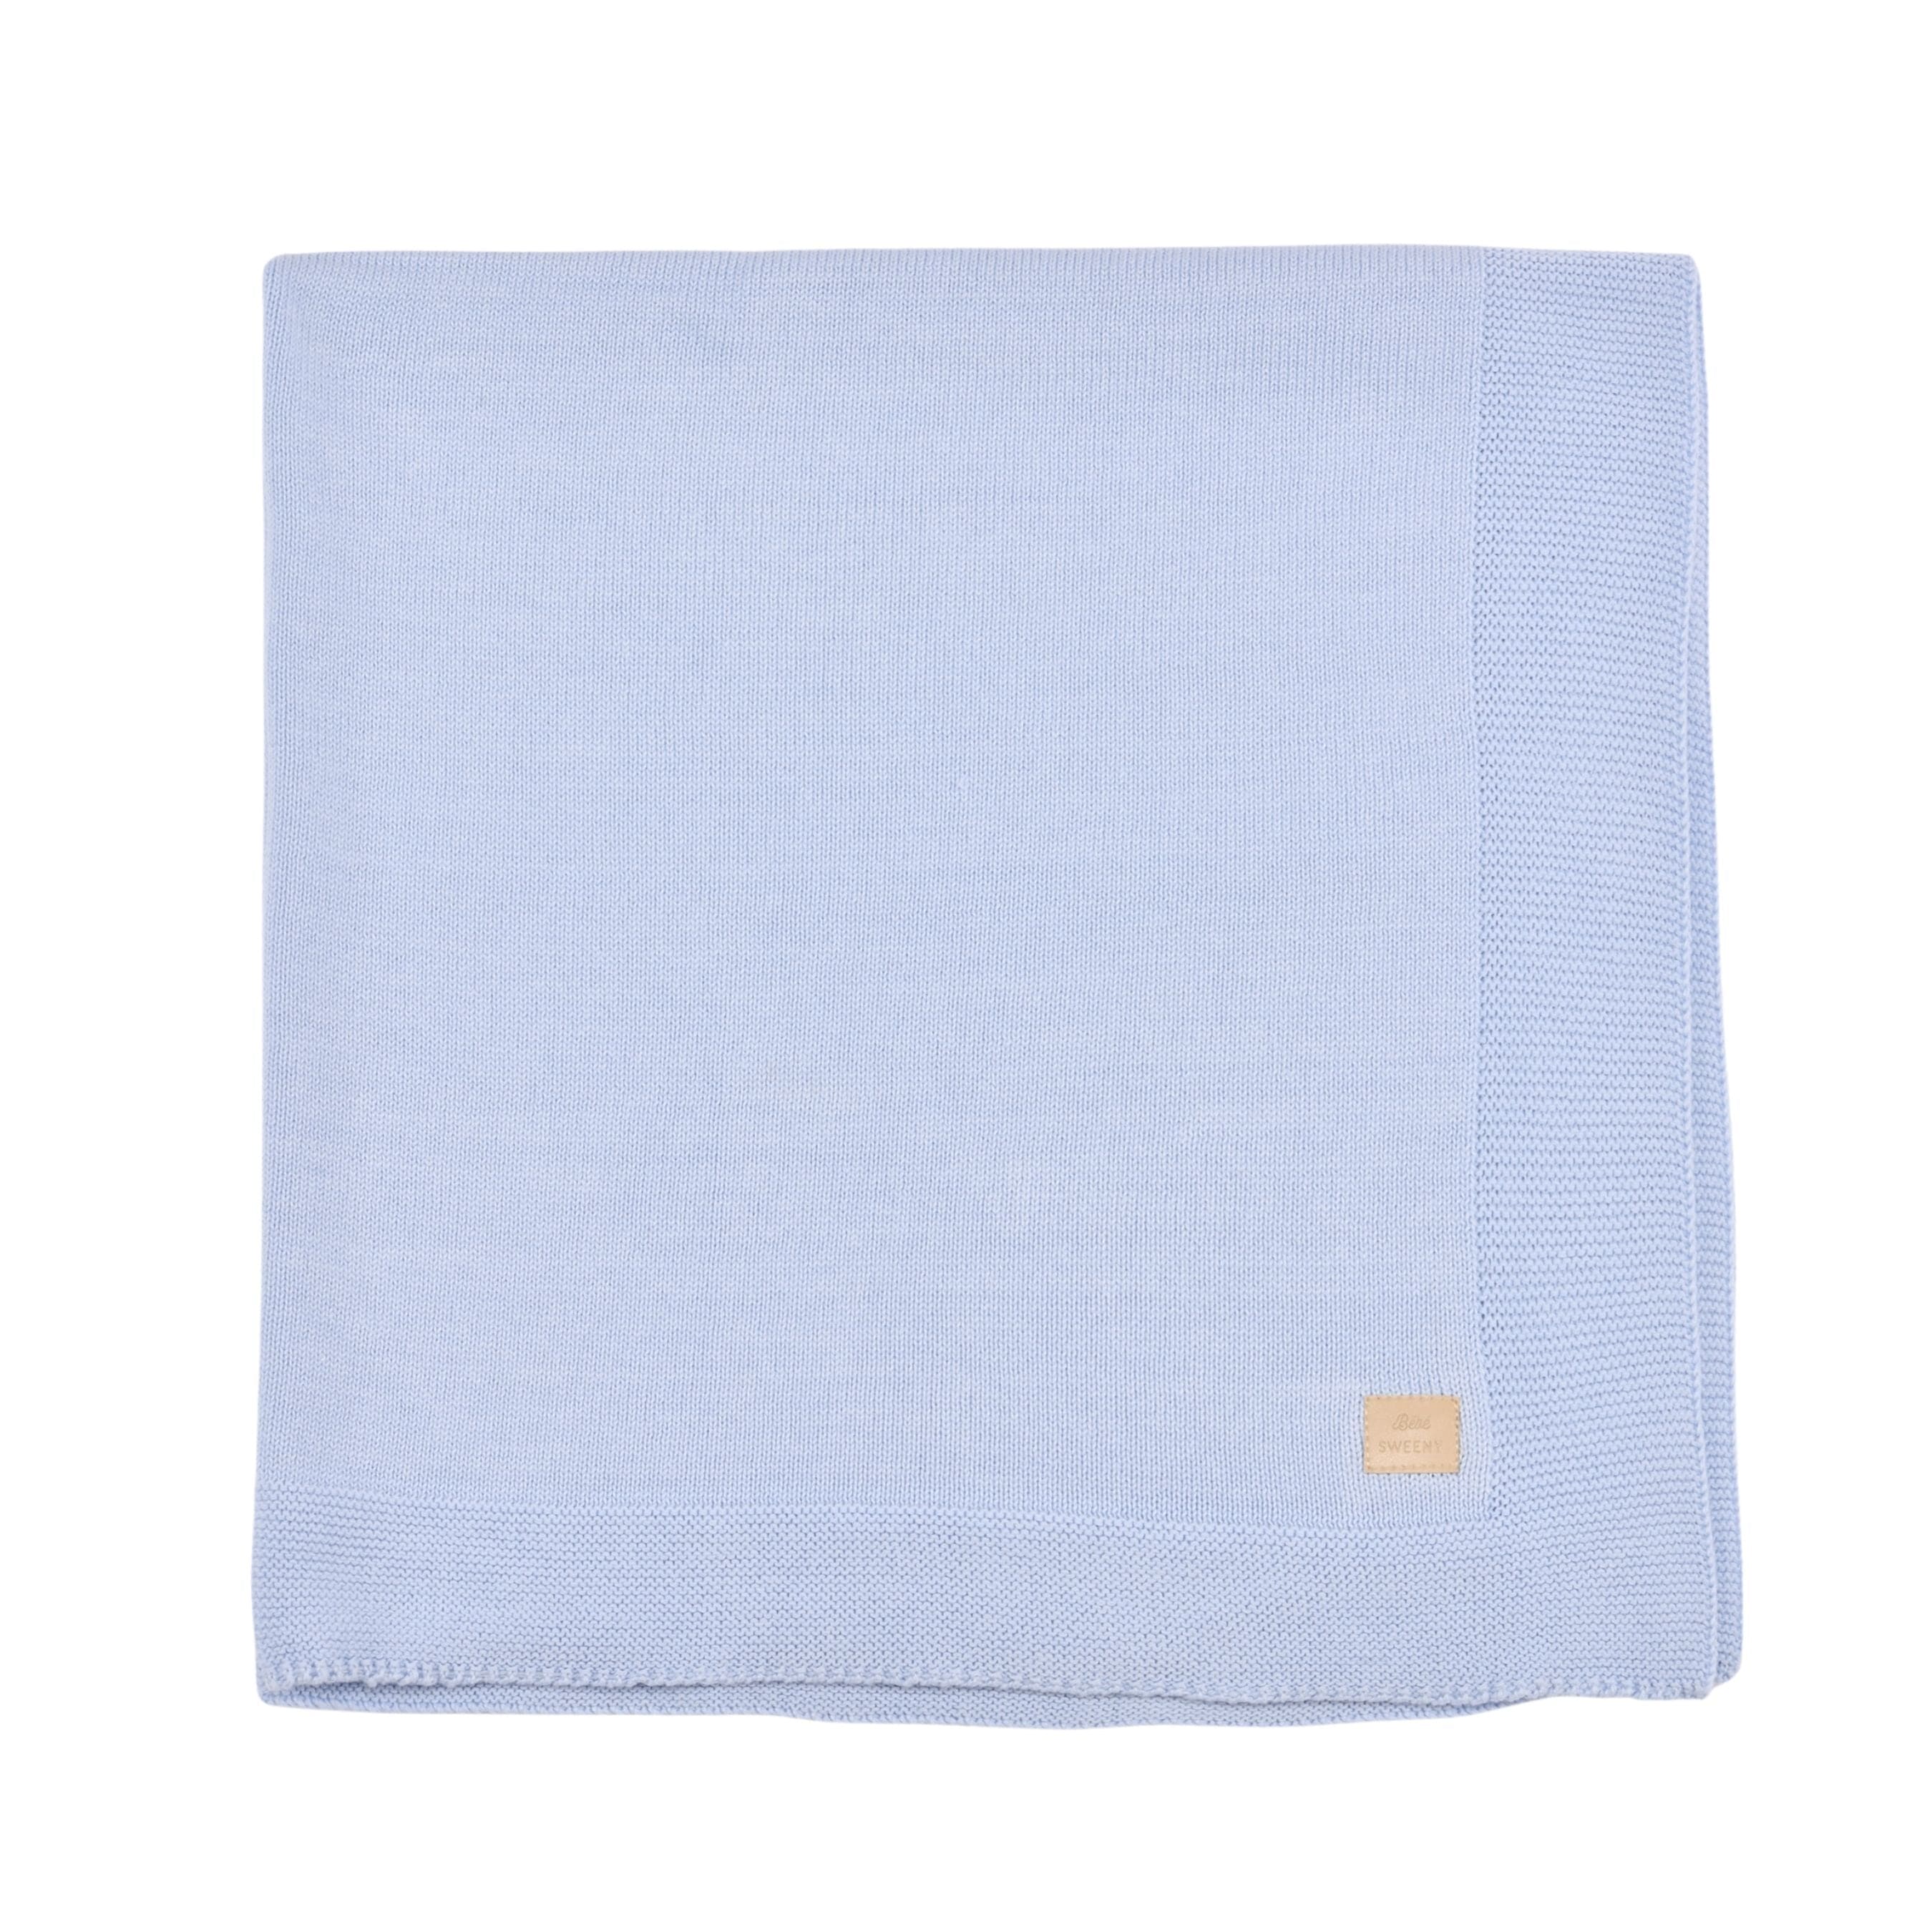 Petit Sweeny Gift Box | Boys Blue Organic Cotton Knit Set (6)